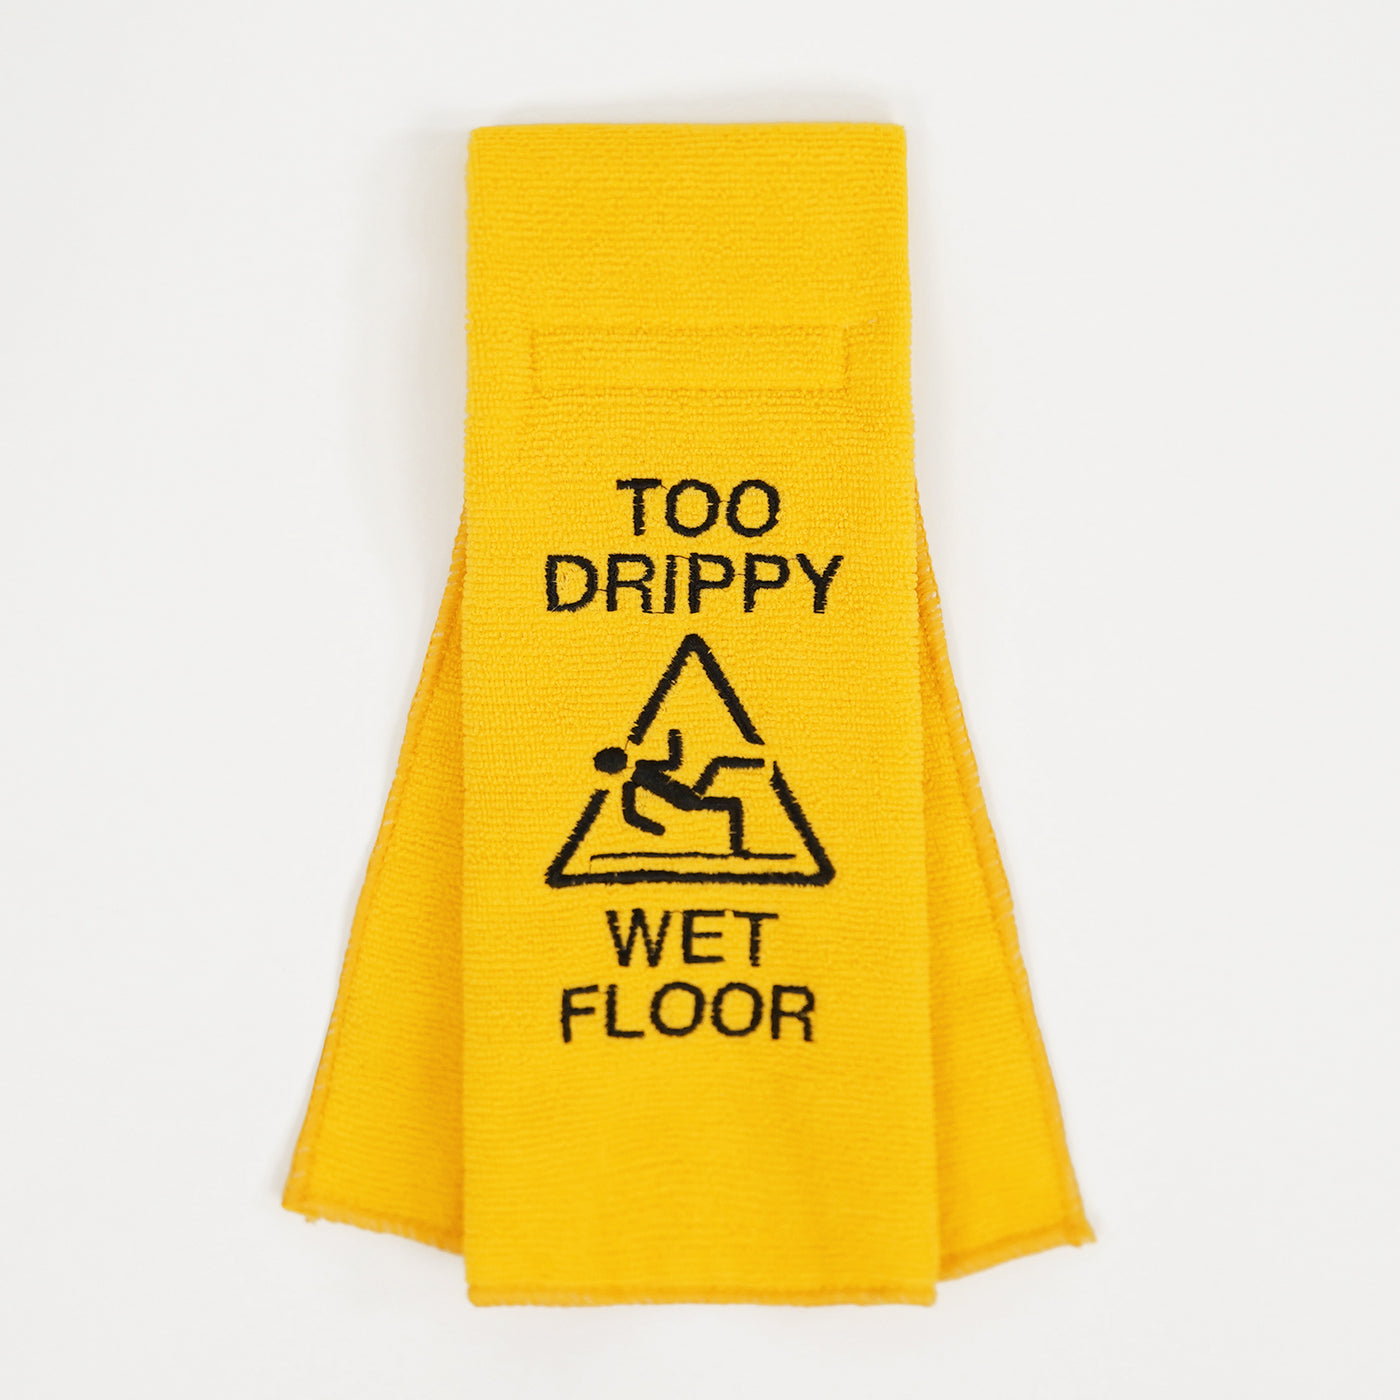 Too Drippy Wet Floor Football Towel